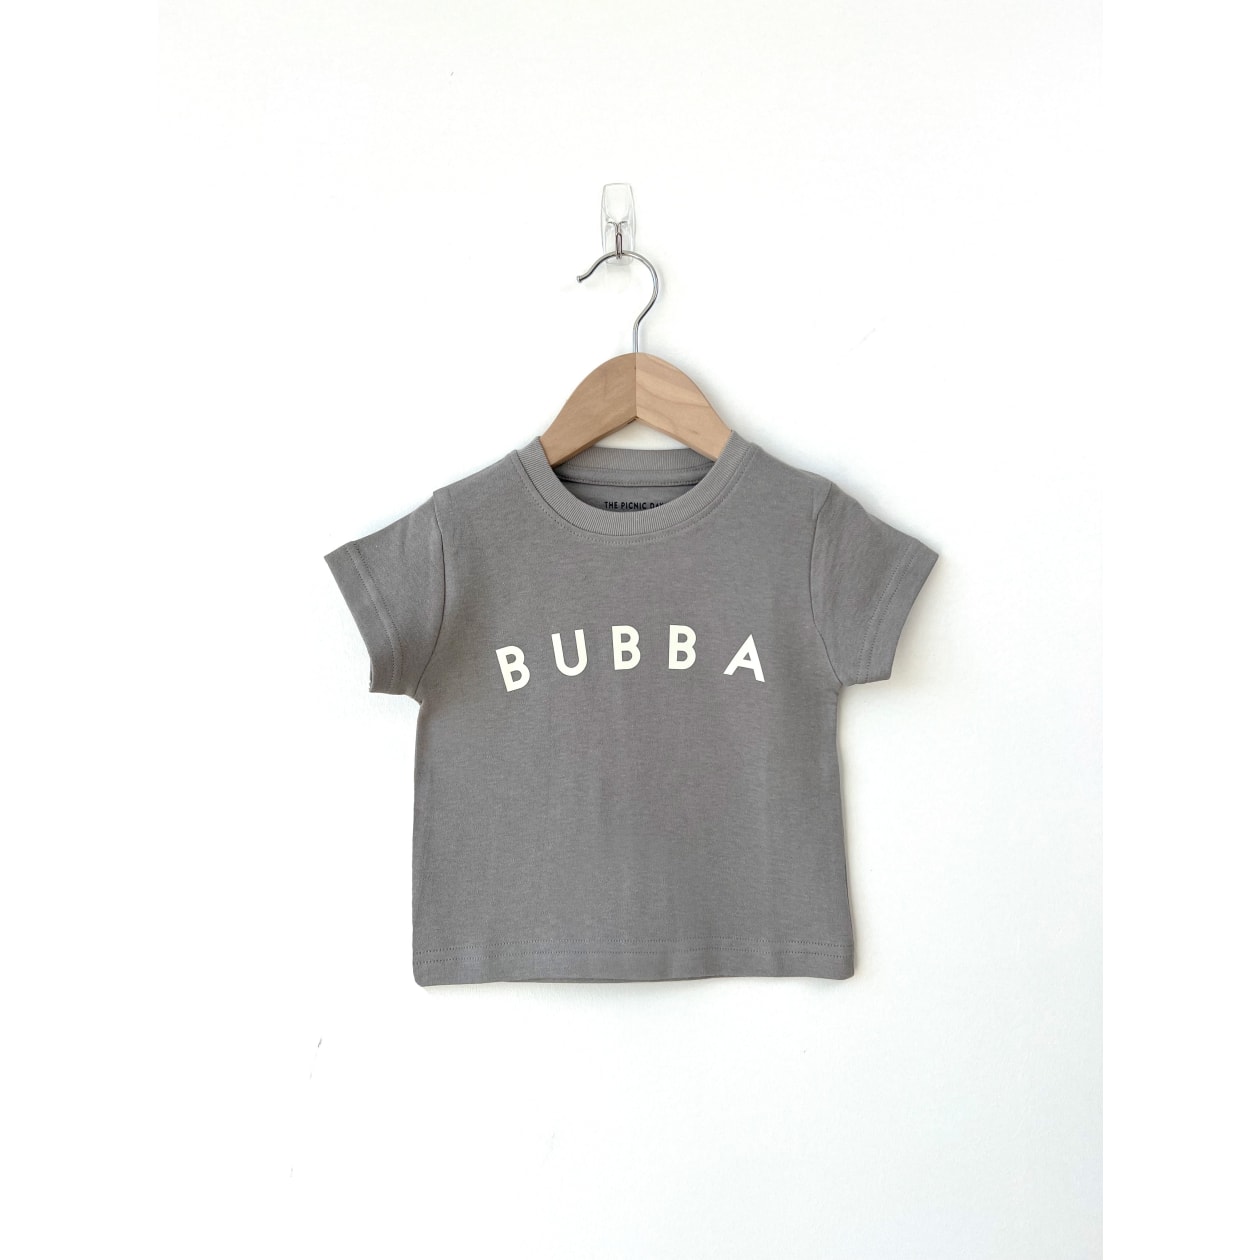 Bubba T-Shirt - Size: 4"